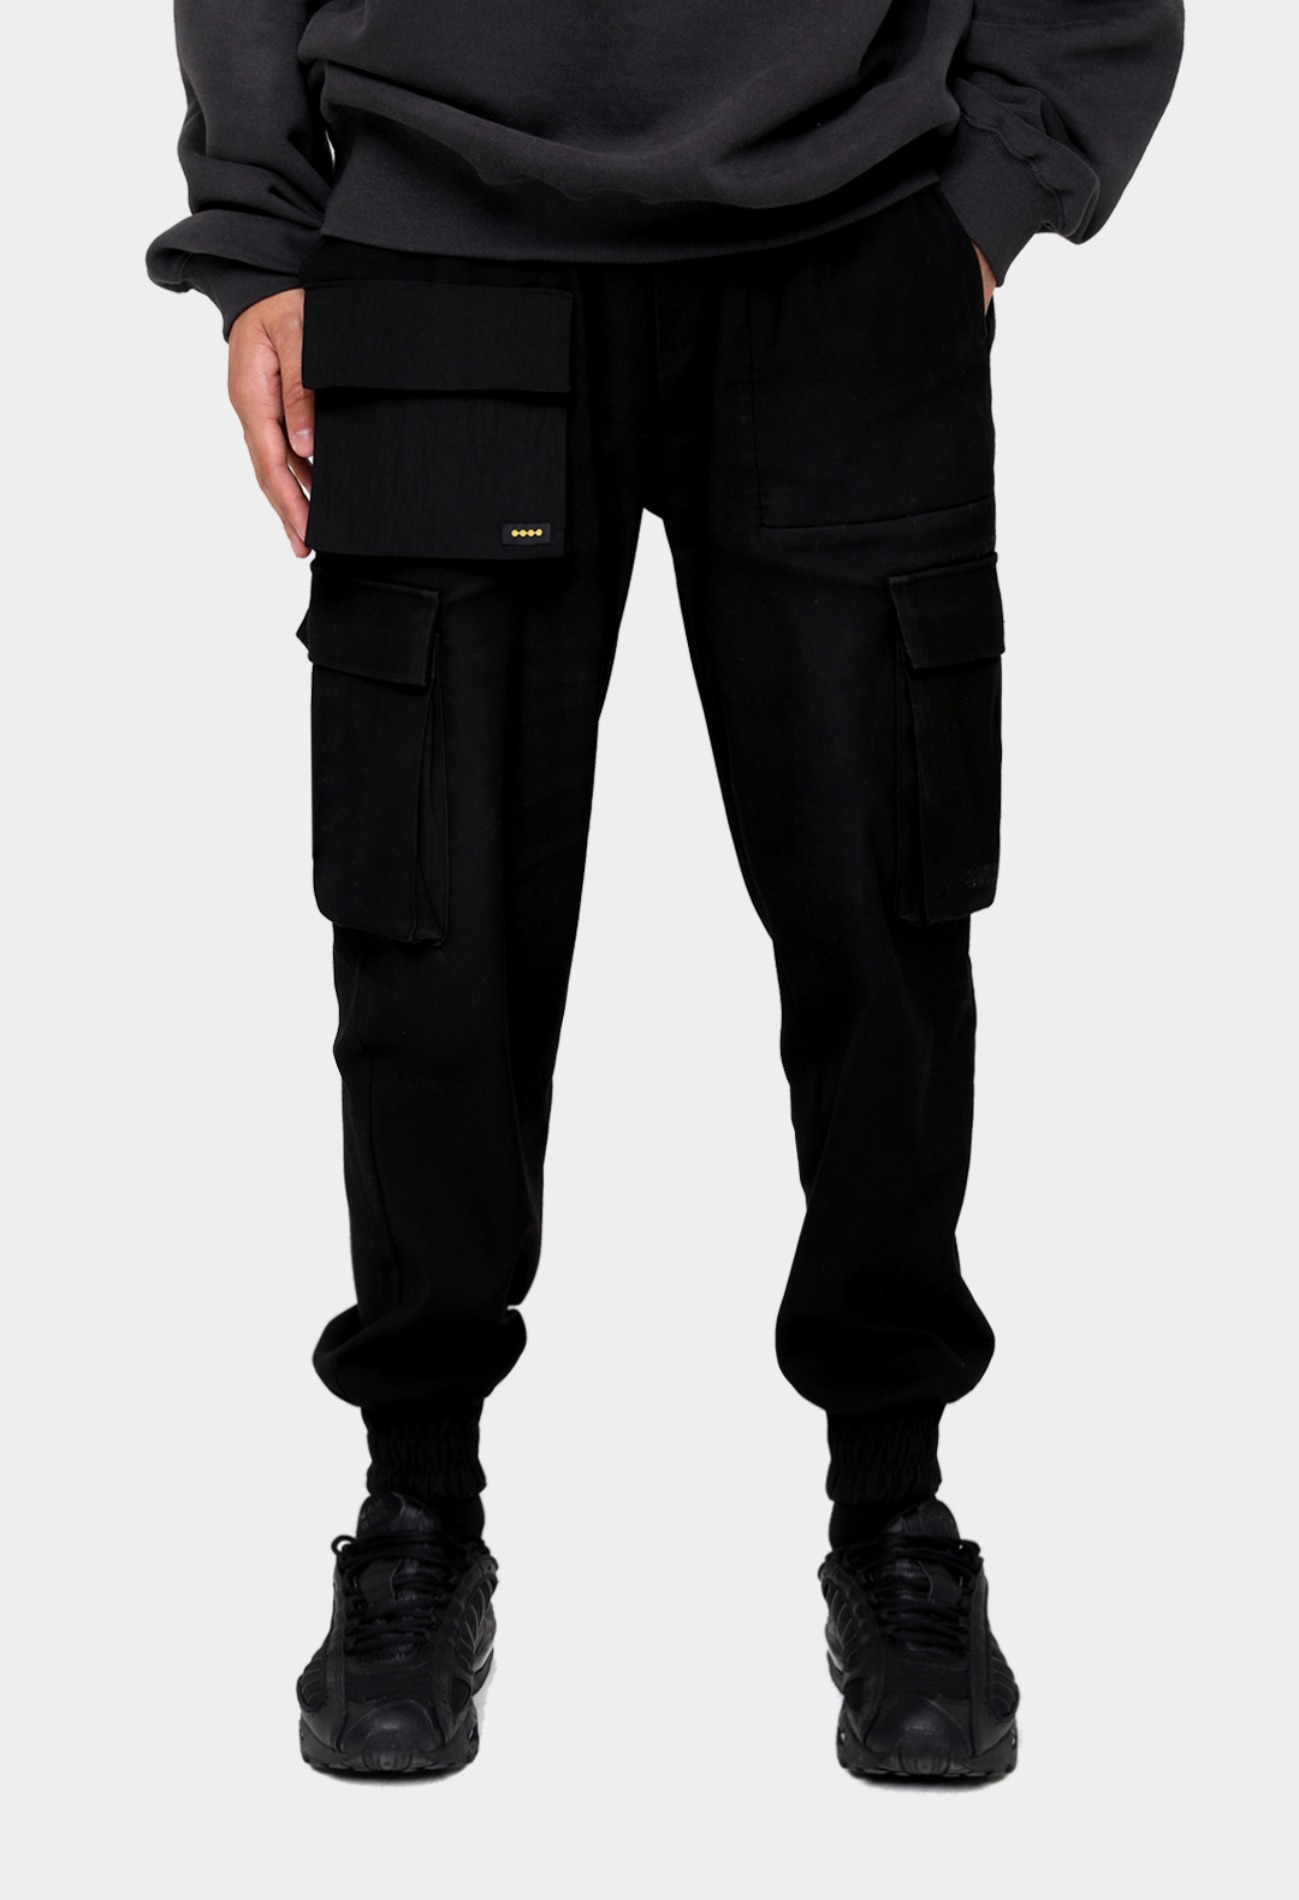 keek [Unisex] Pocket Joger Pants - Black 스트릿패션 유니섹스브랜드 커플시밀러룩 남자쇼핑몰 여성의류쇼핑몰 후드티 힙색